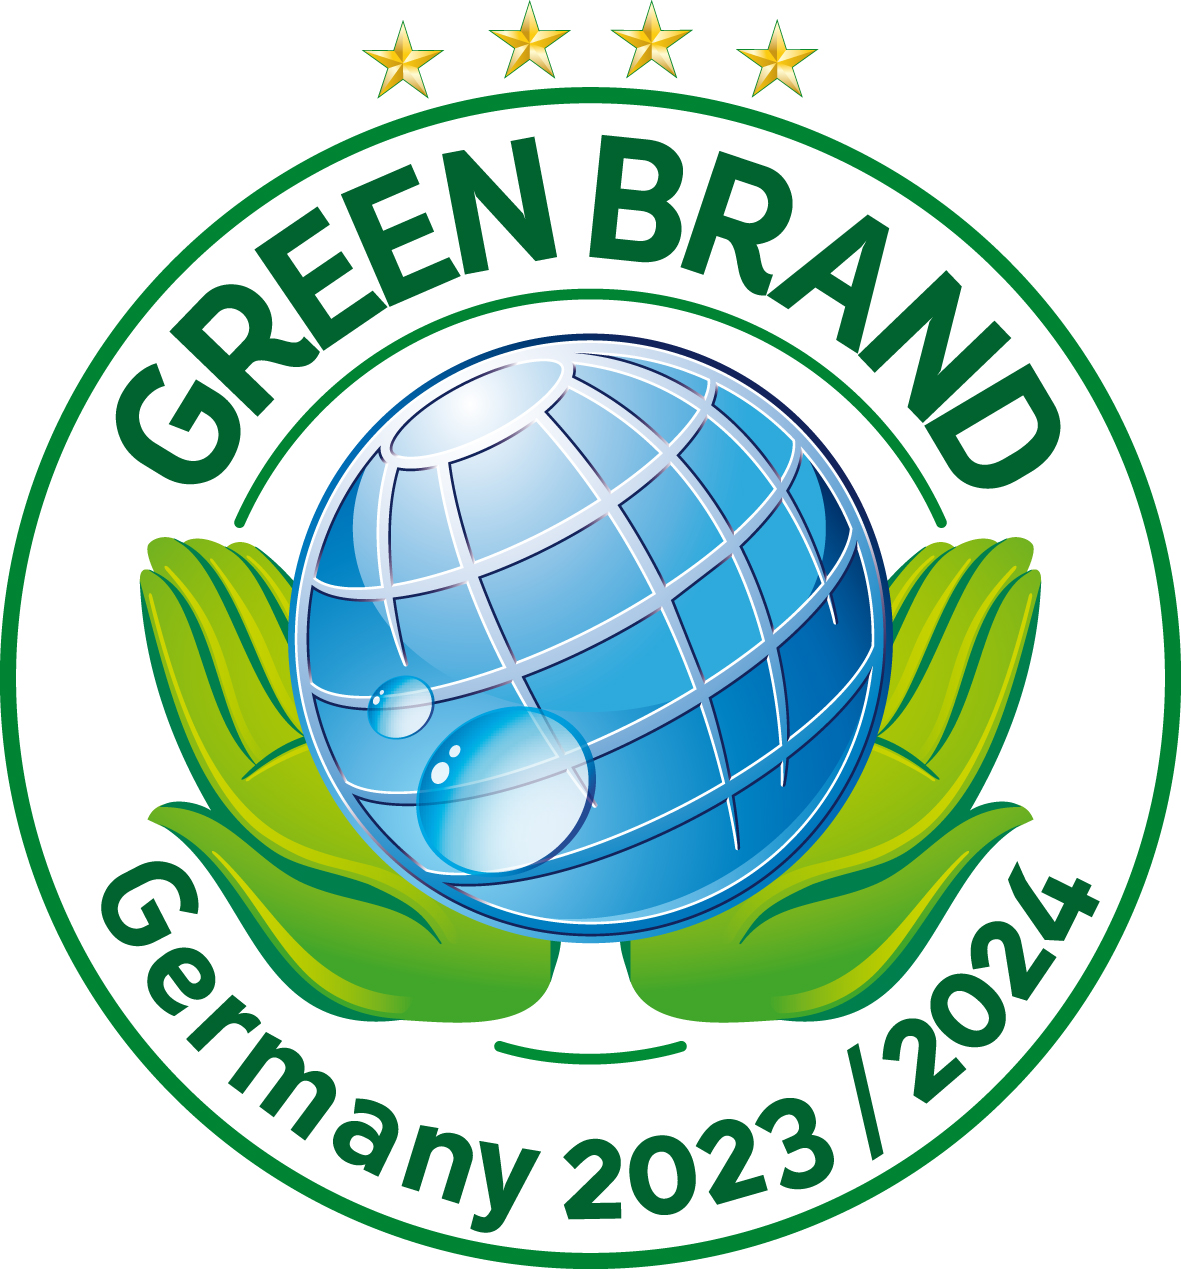 GREEN BRAND GERMANY 2023_2024_Original_12668